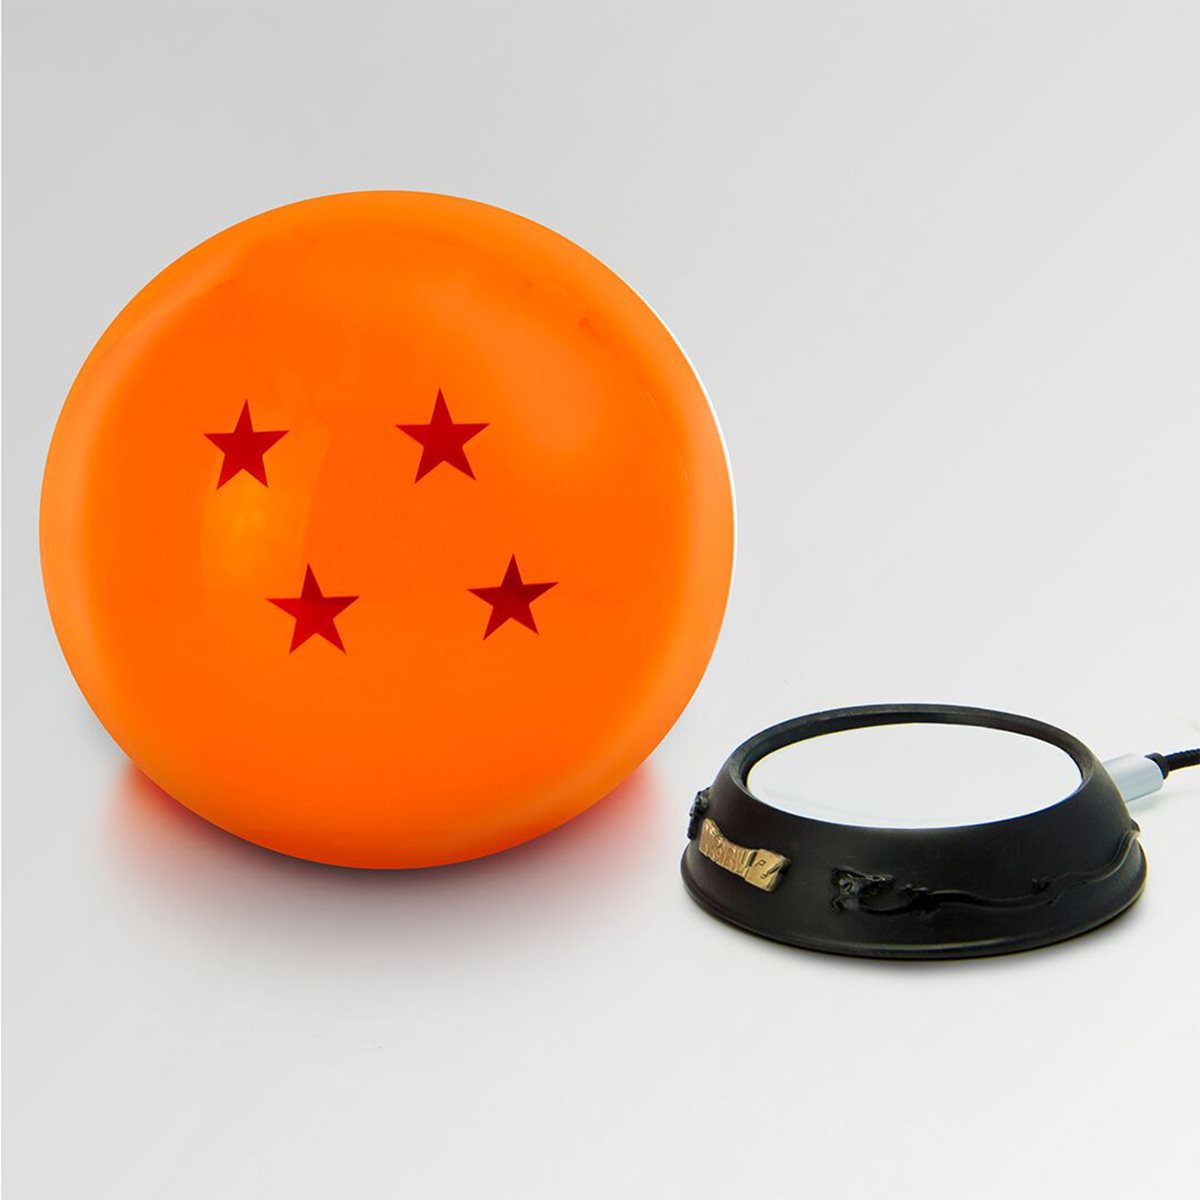 Dragon Ball Z - Premium Collector's Lamp